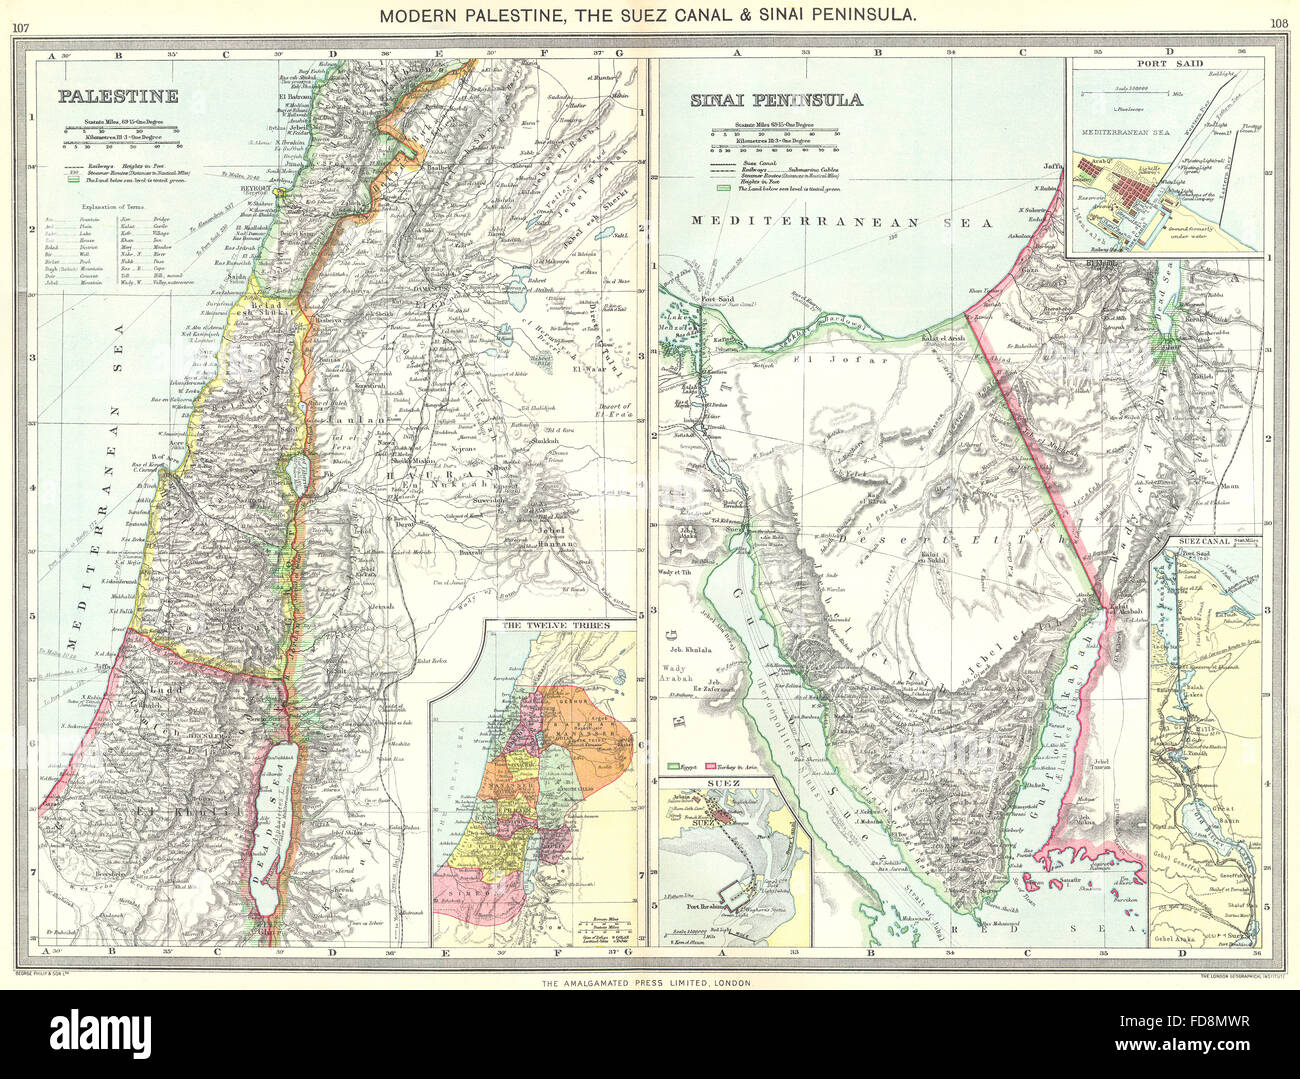 ISRAEL: Palestine; Sinai; port Said; Suez Canal; 12 Tribes, 1907 antique map Stock Photo